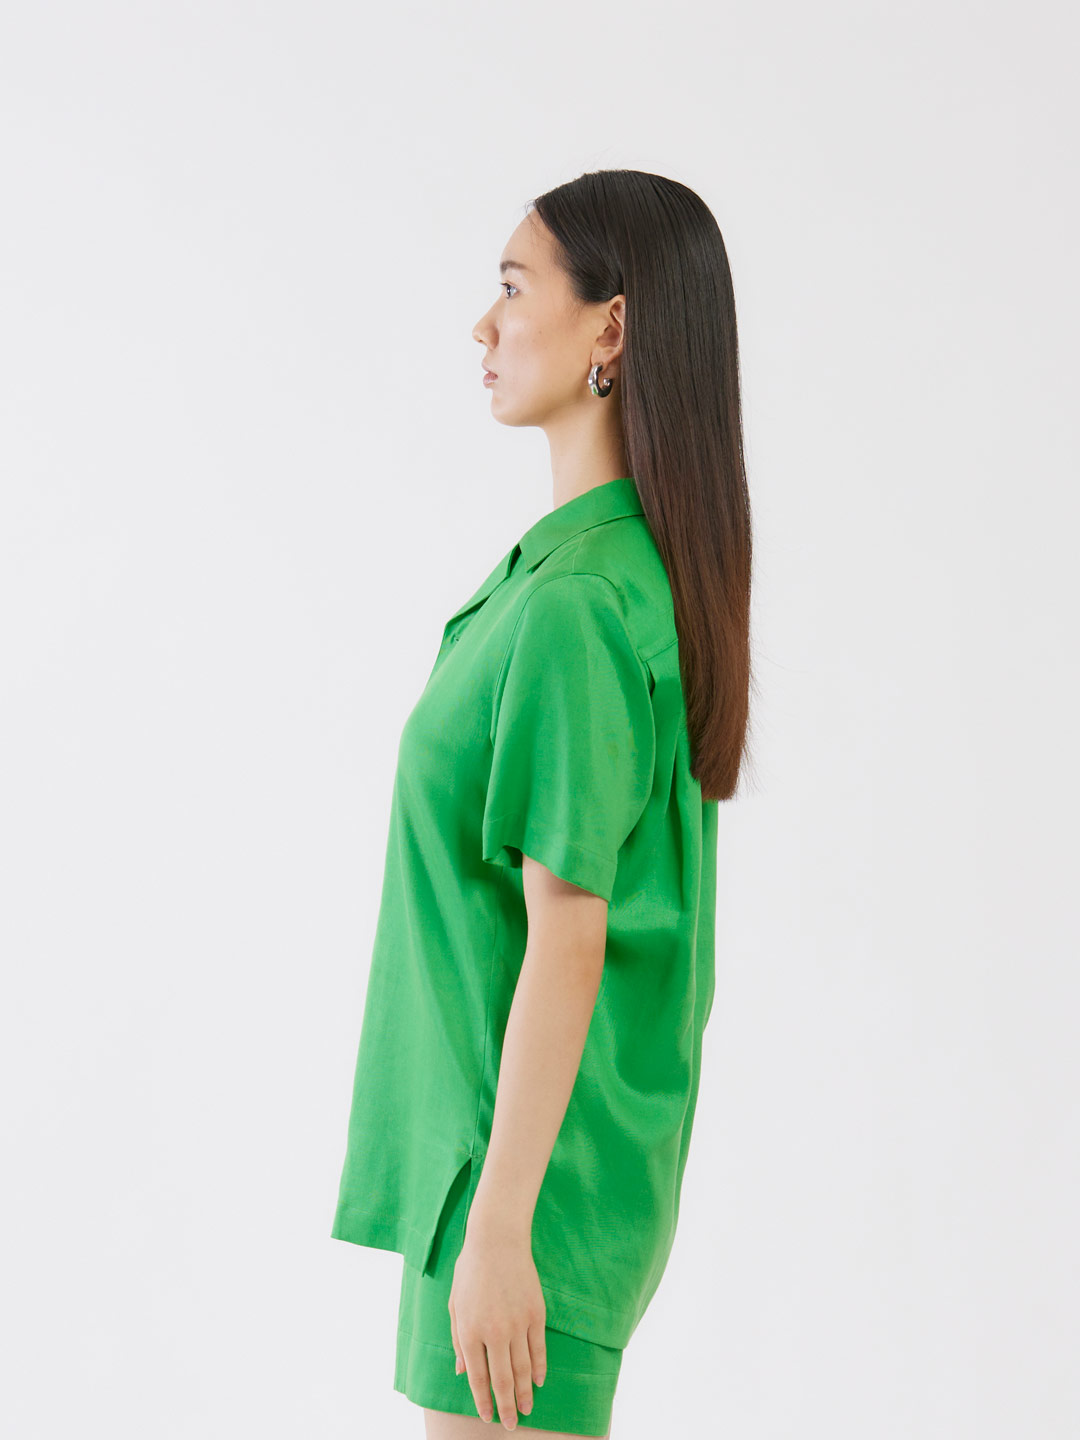 Short Sleeve Top - Green